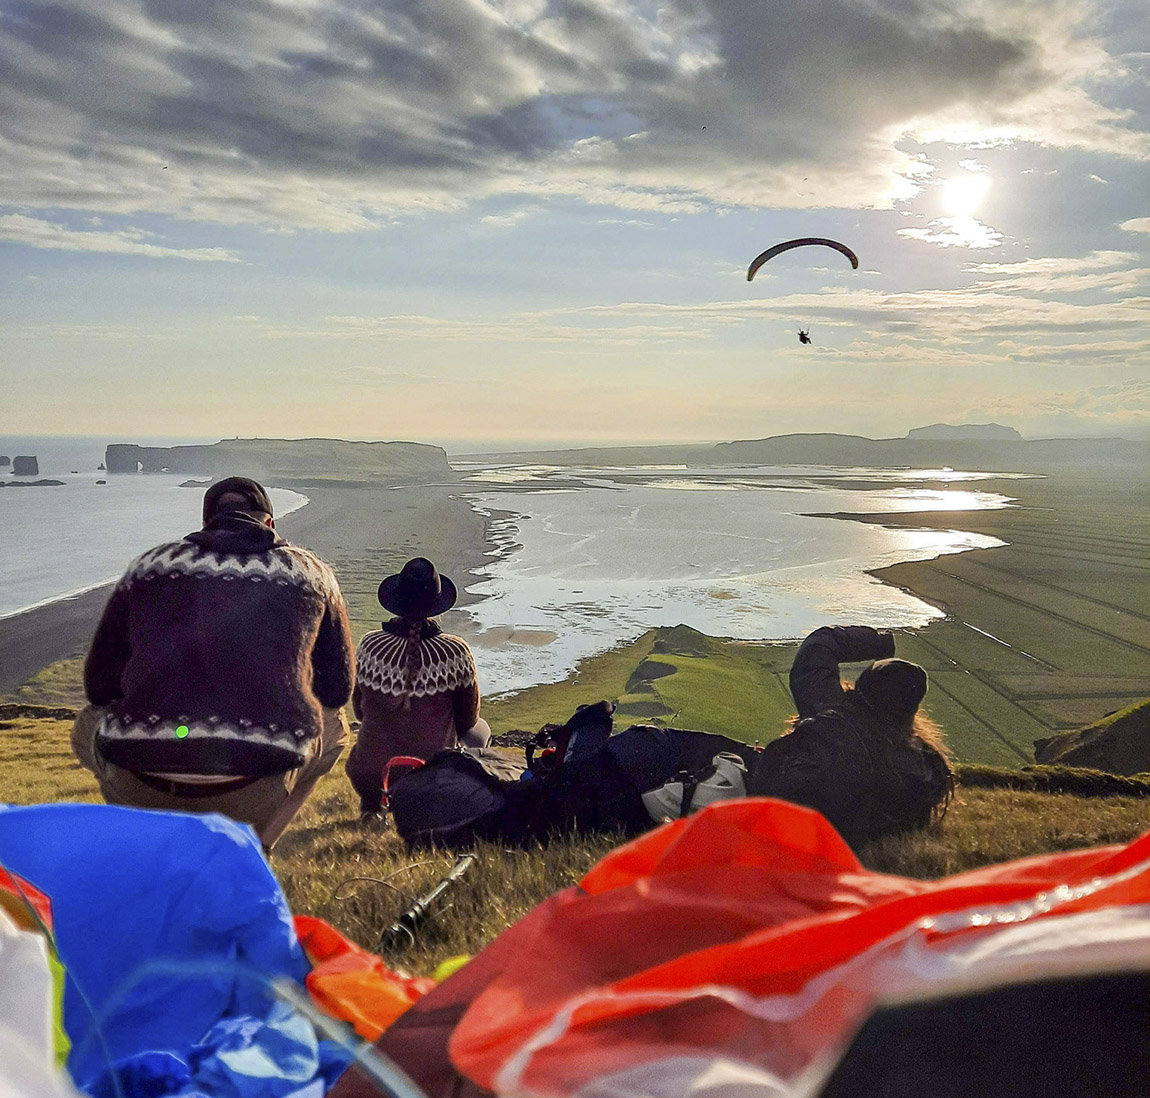 True Adventure: Paraglide and zipline on Iceland’s wild volcanic coastline